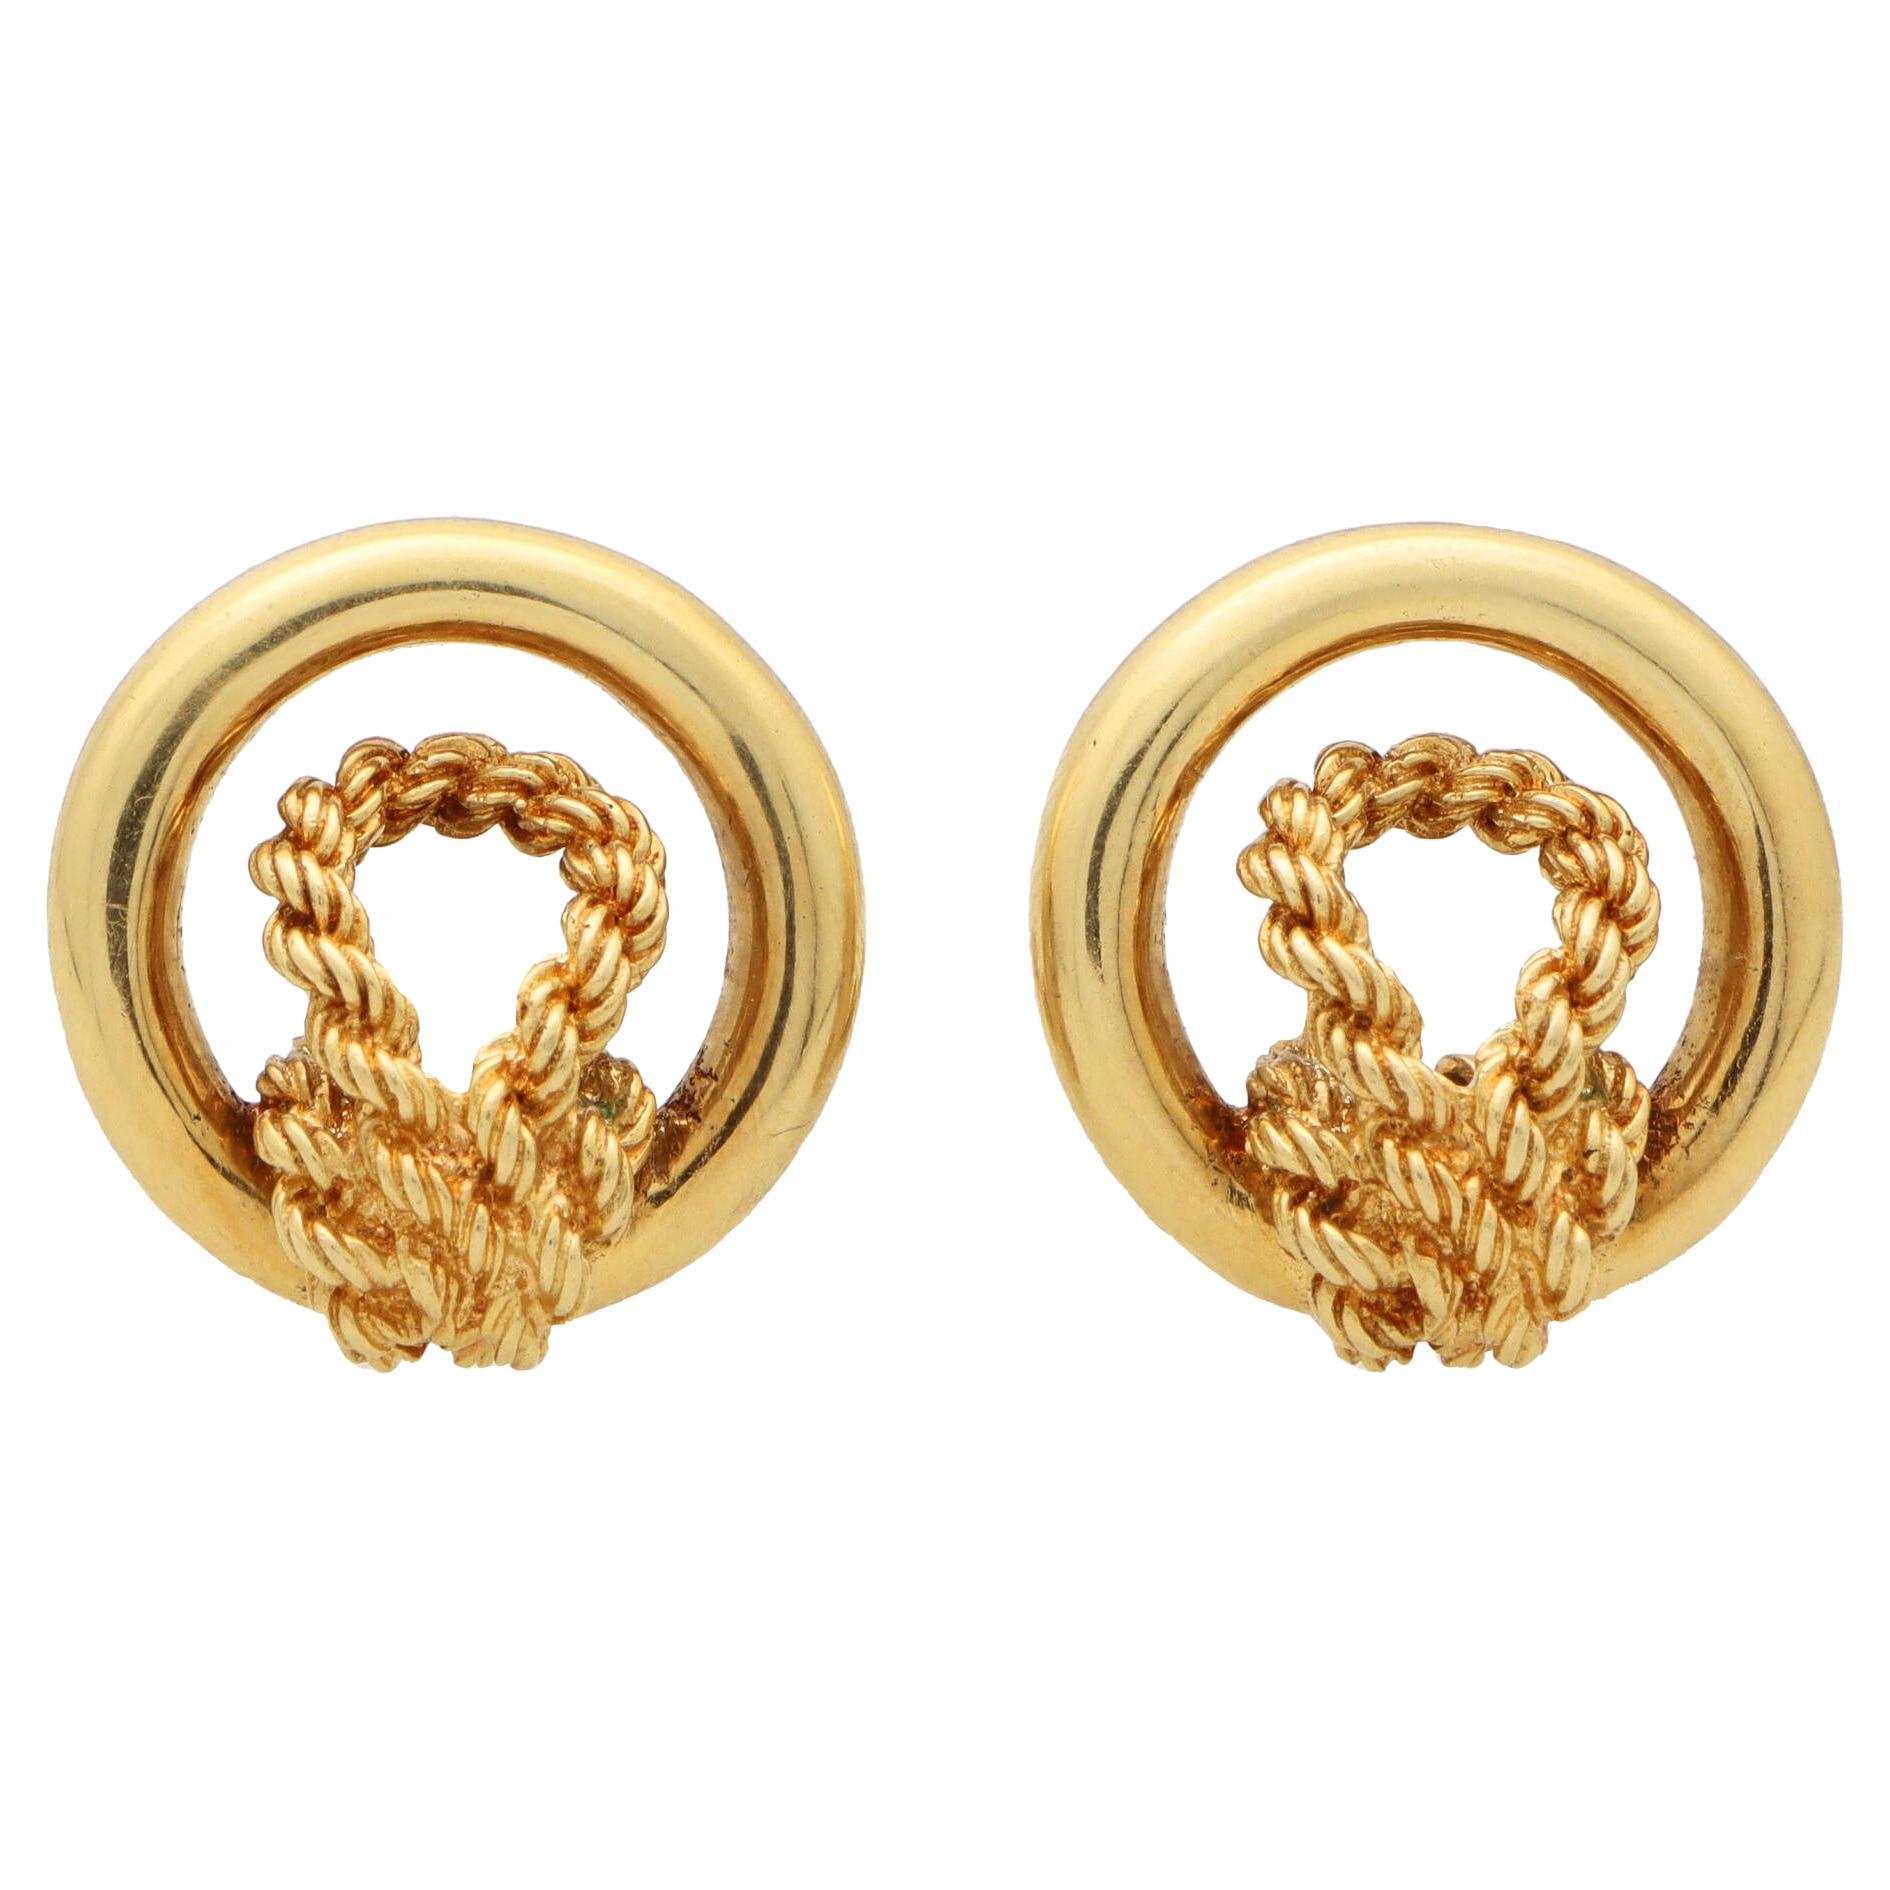  Vintage Hermès Paris Circular Knot Earrings Set in 18k Yellow Gold